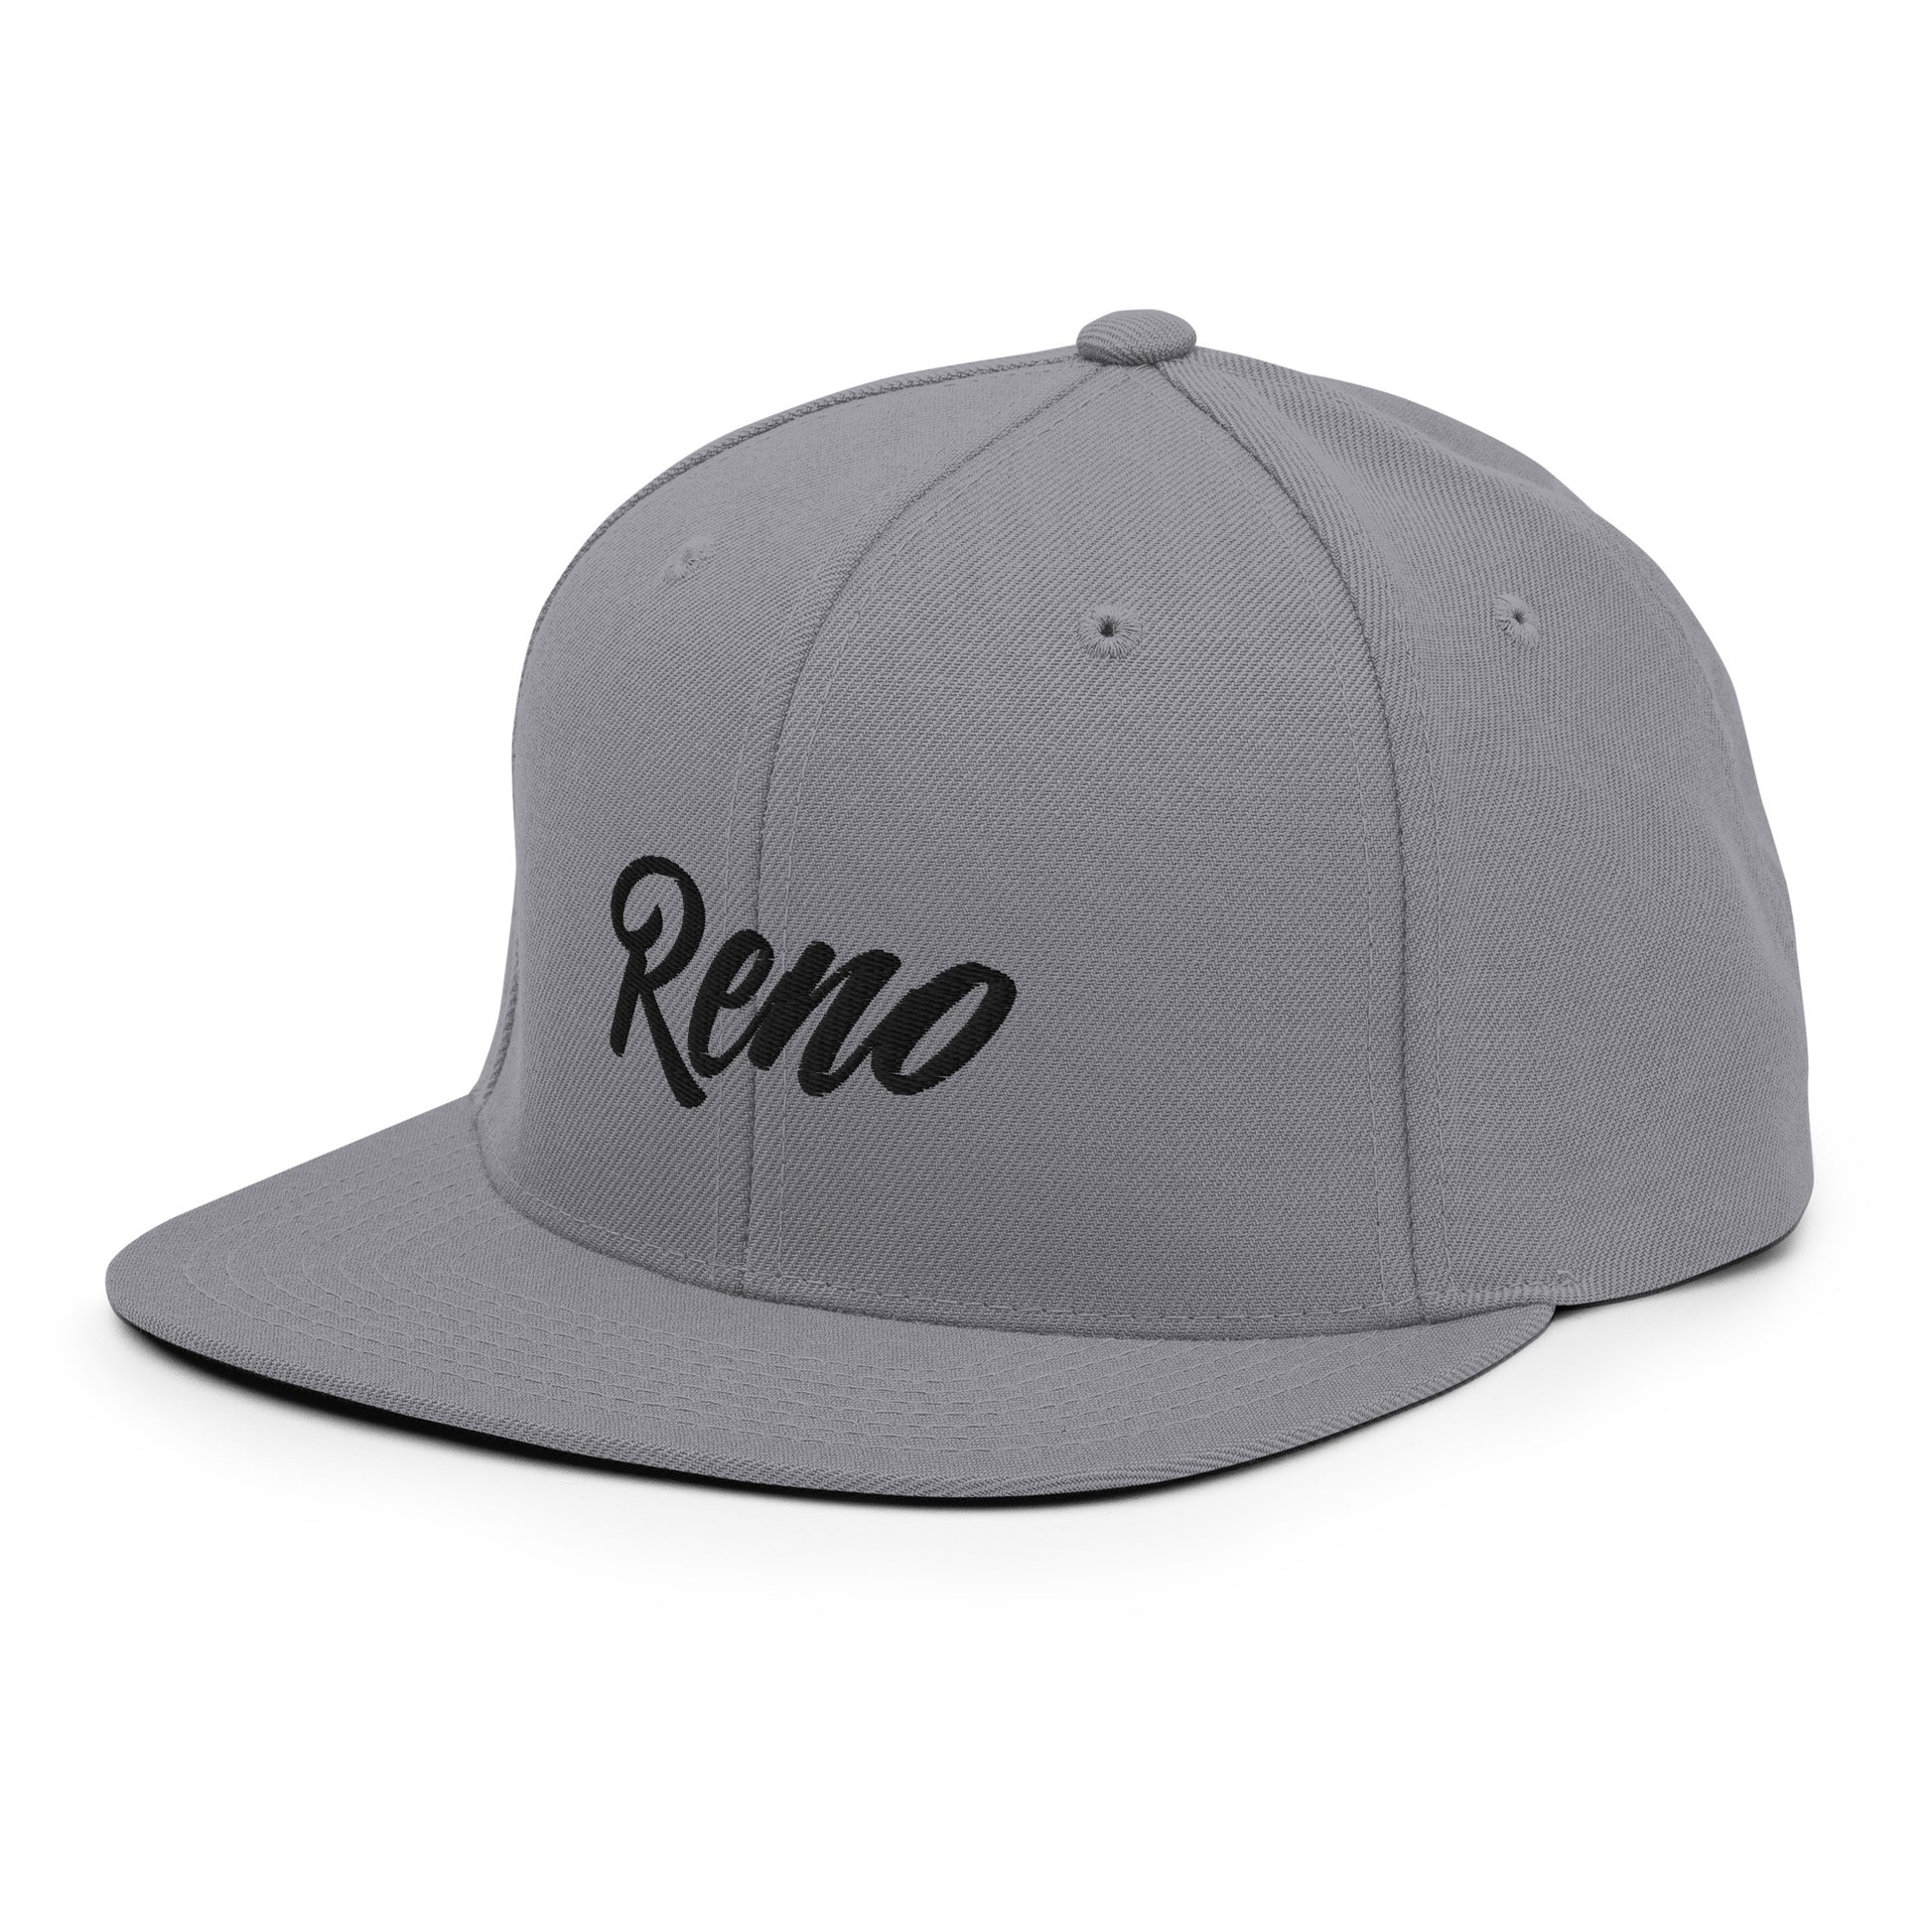 Reno Snapback Hat 4